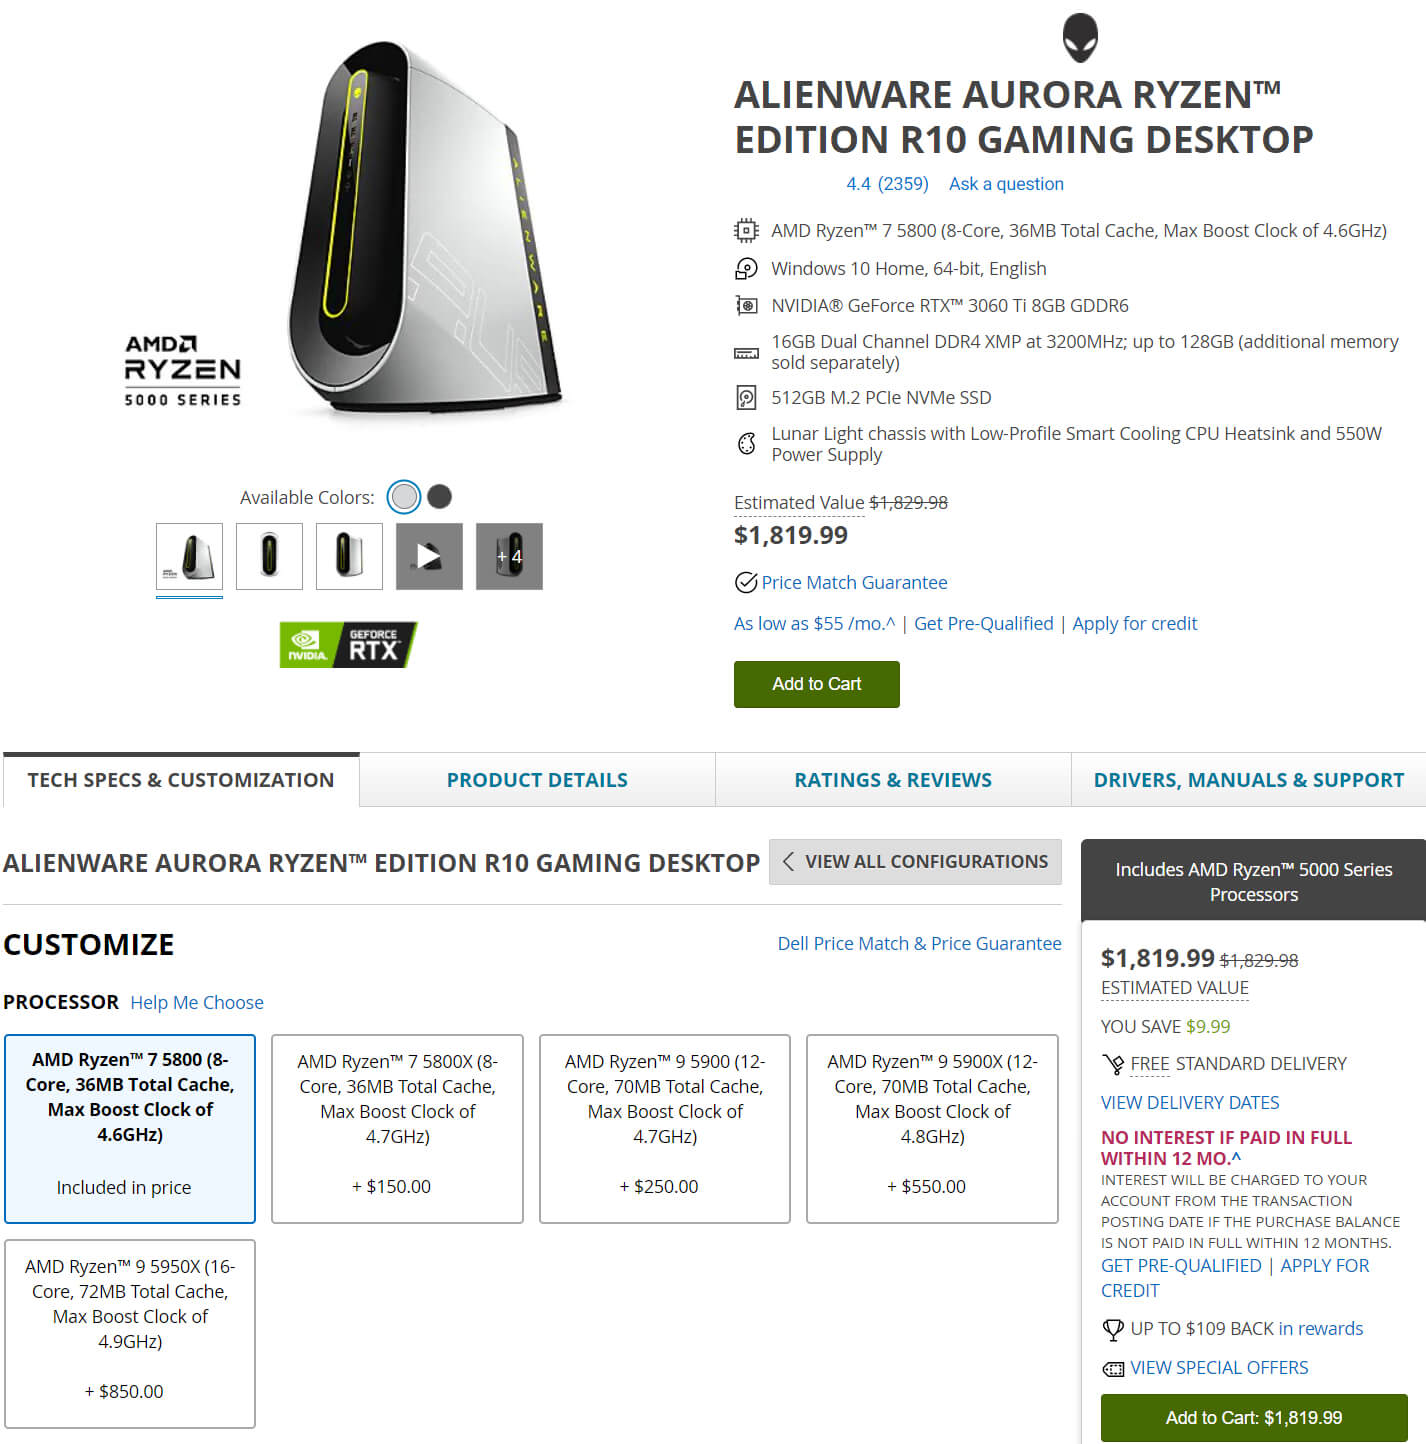 Alienware Aurora Ryzen Edition R10 Gaming Desktop